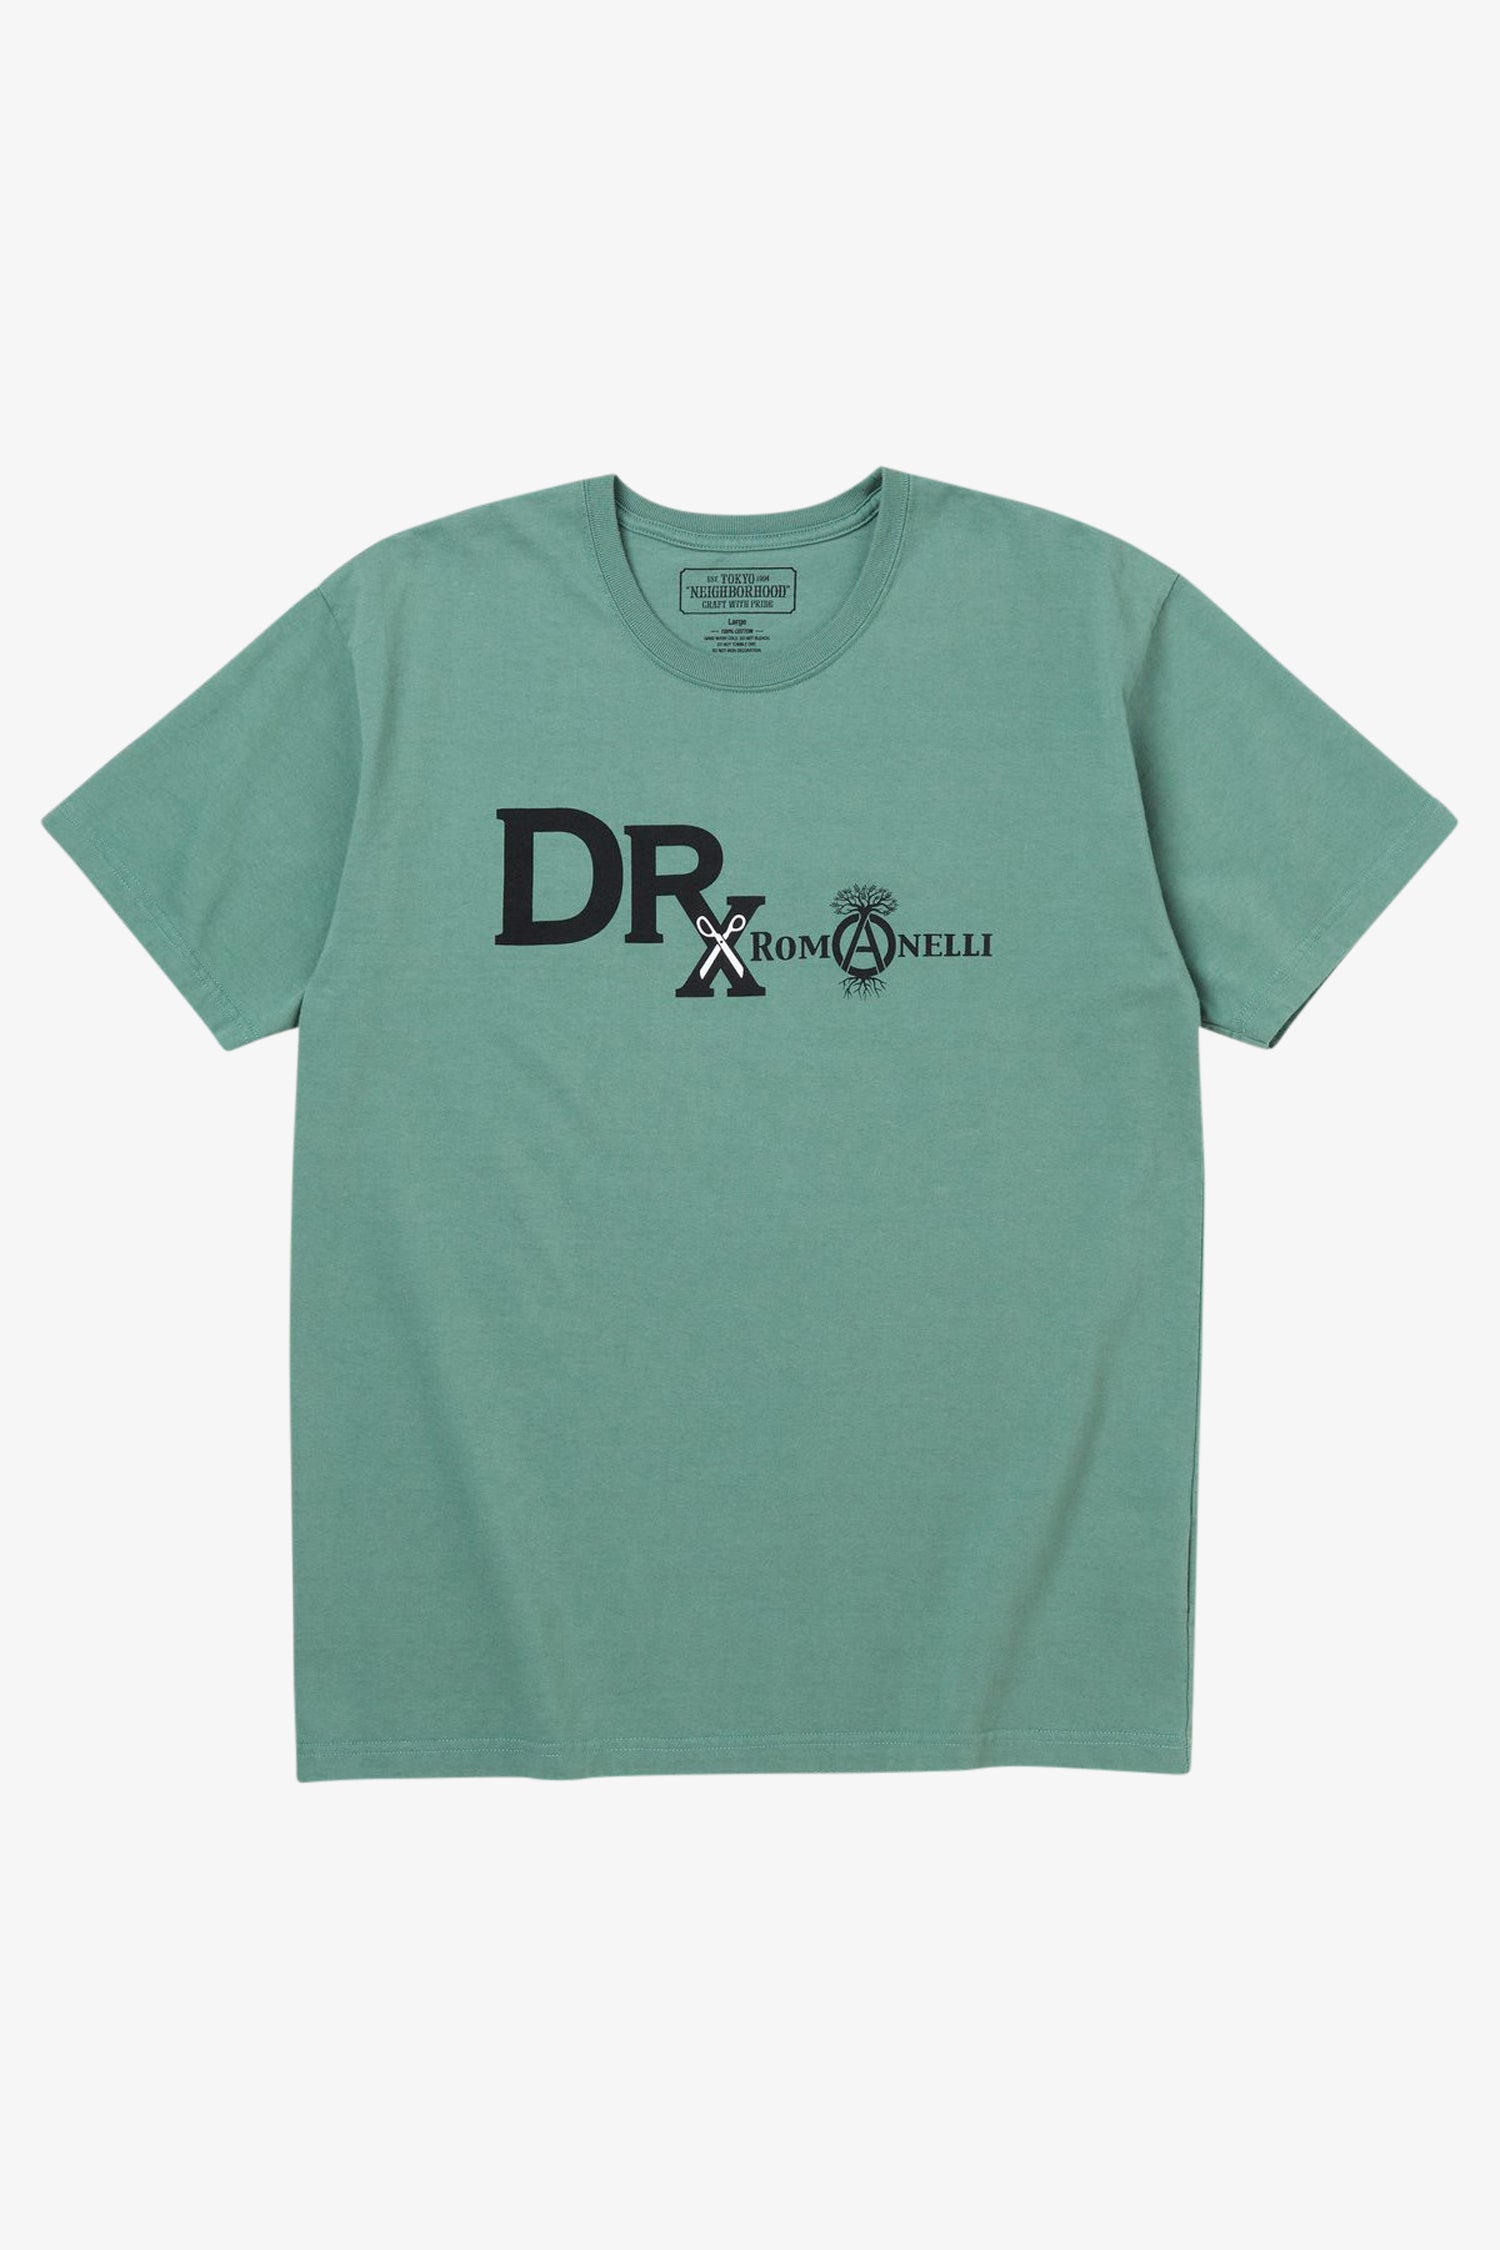 Selectshop FRAME - NEIGHBORHOOD DRXSRL / C-Tee . SS T-Shirt Dubai